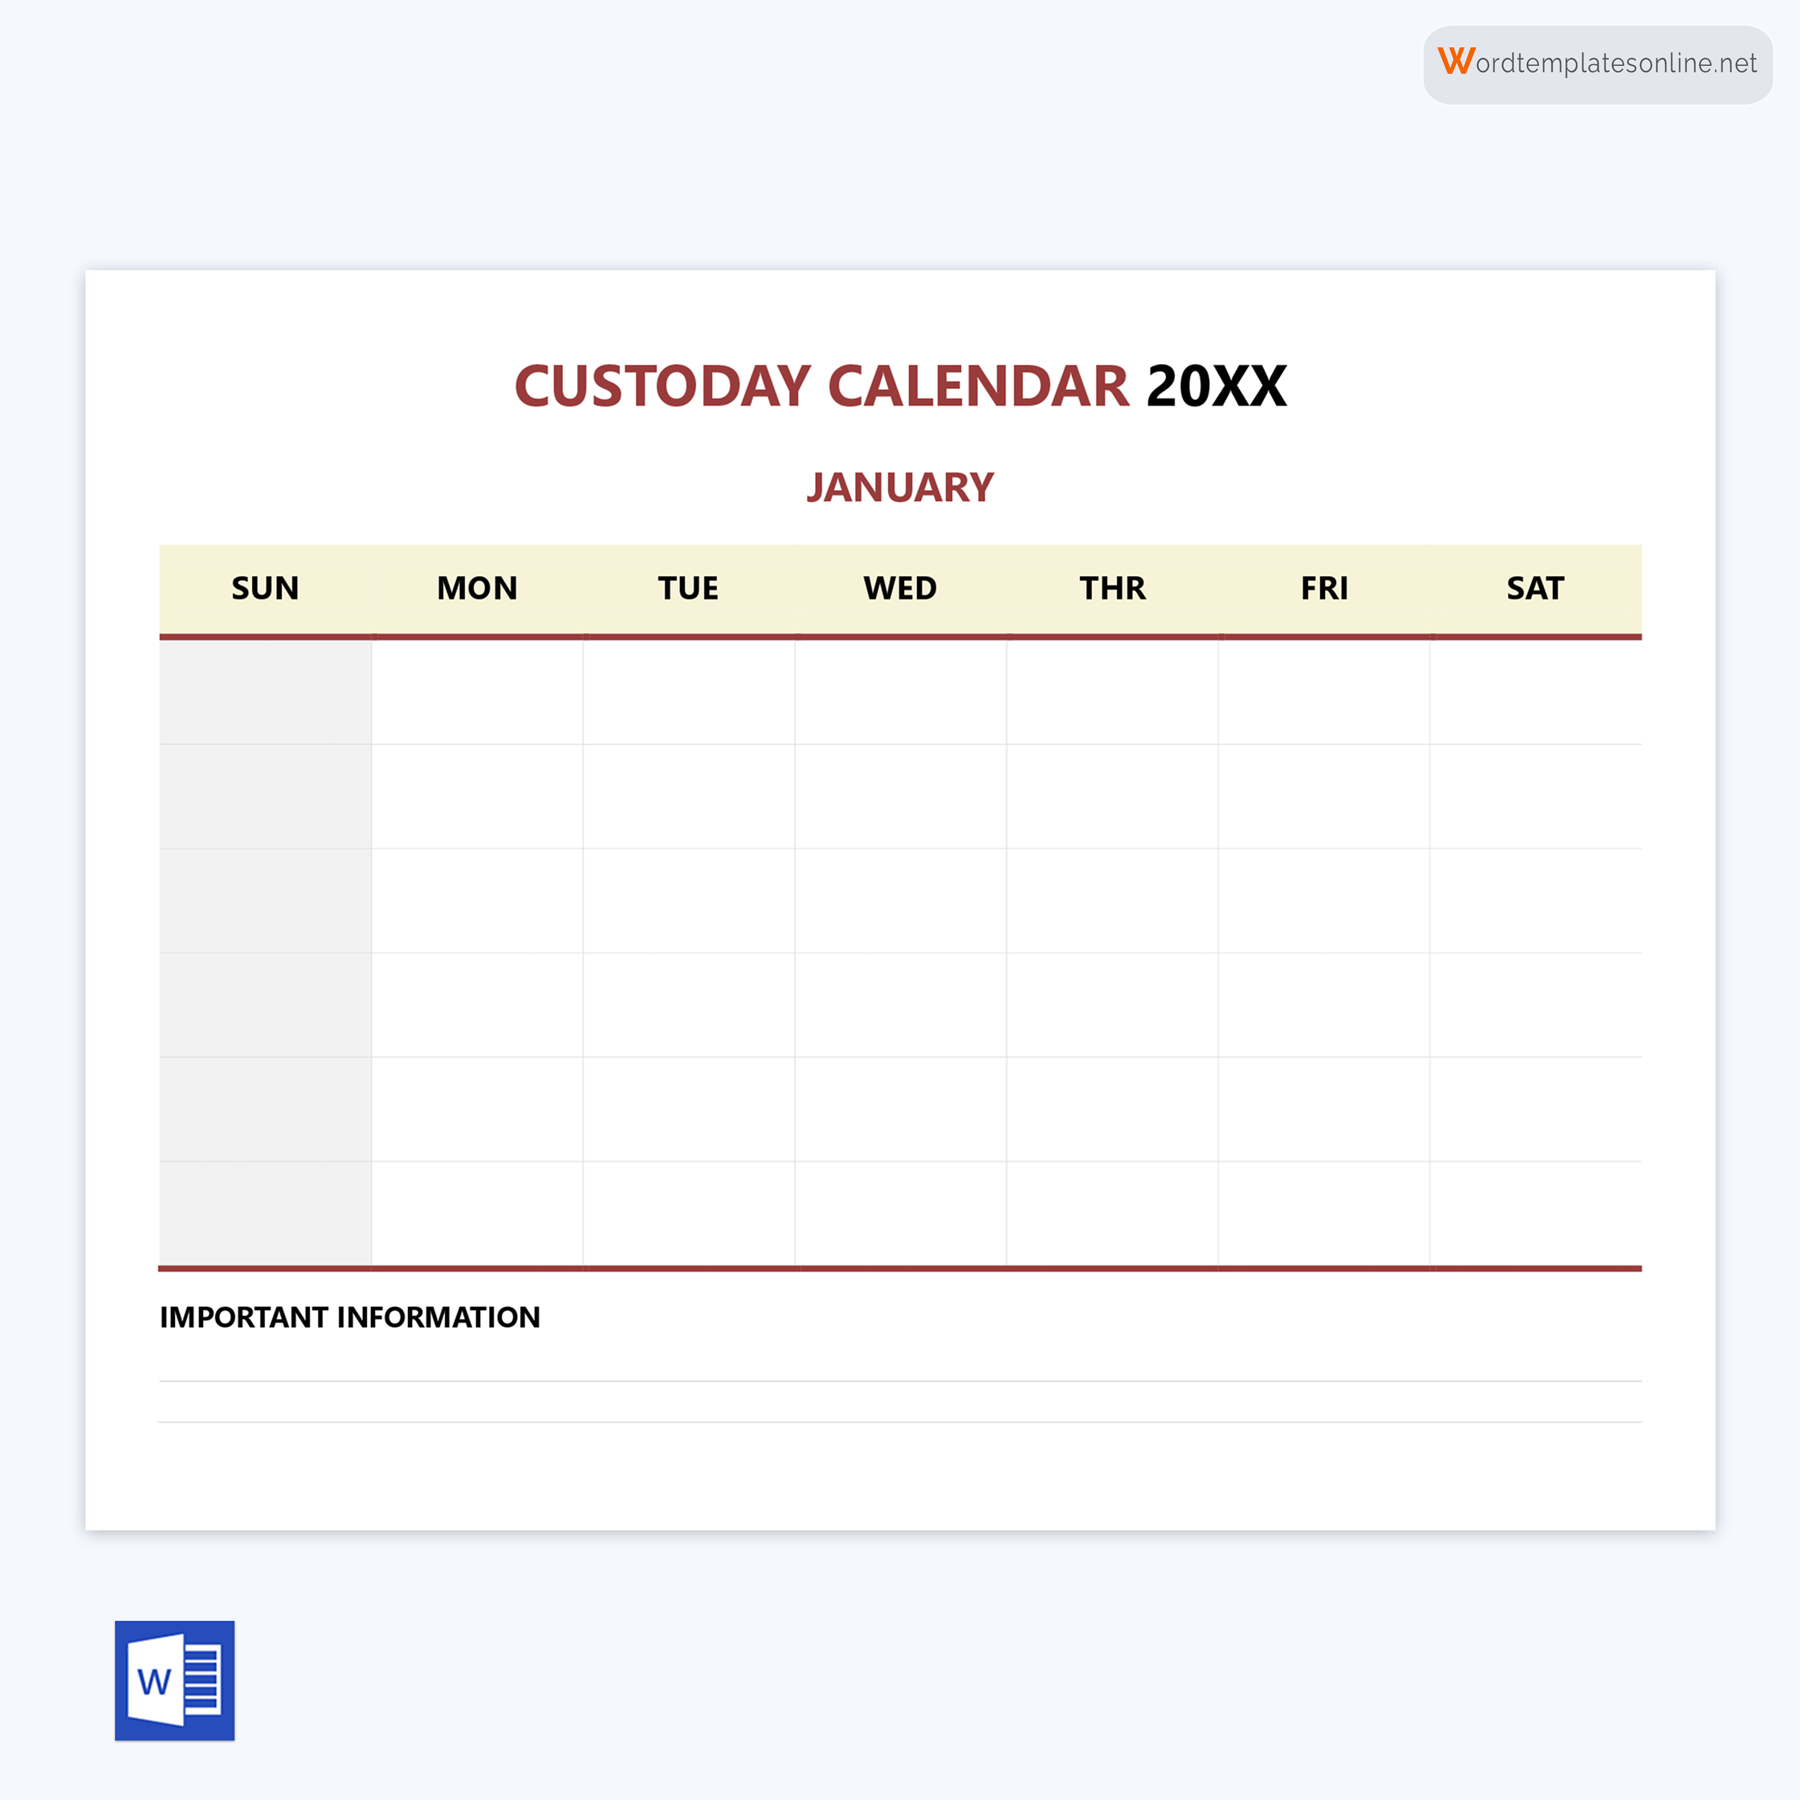 Sample Custody Calendar Format